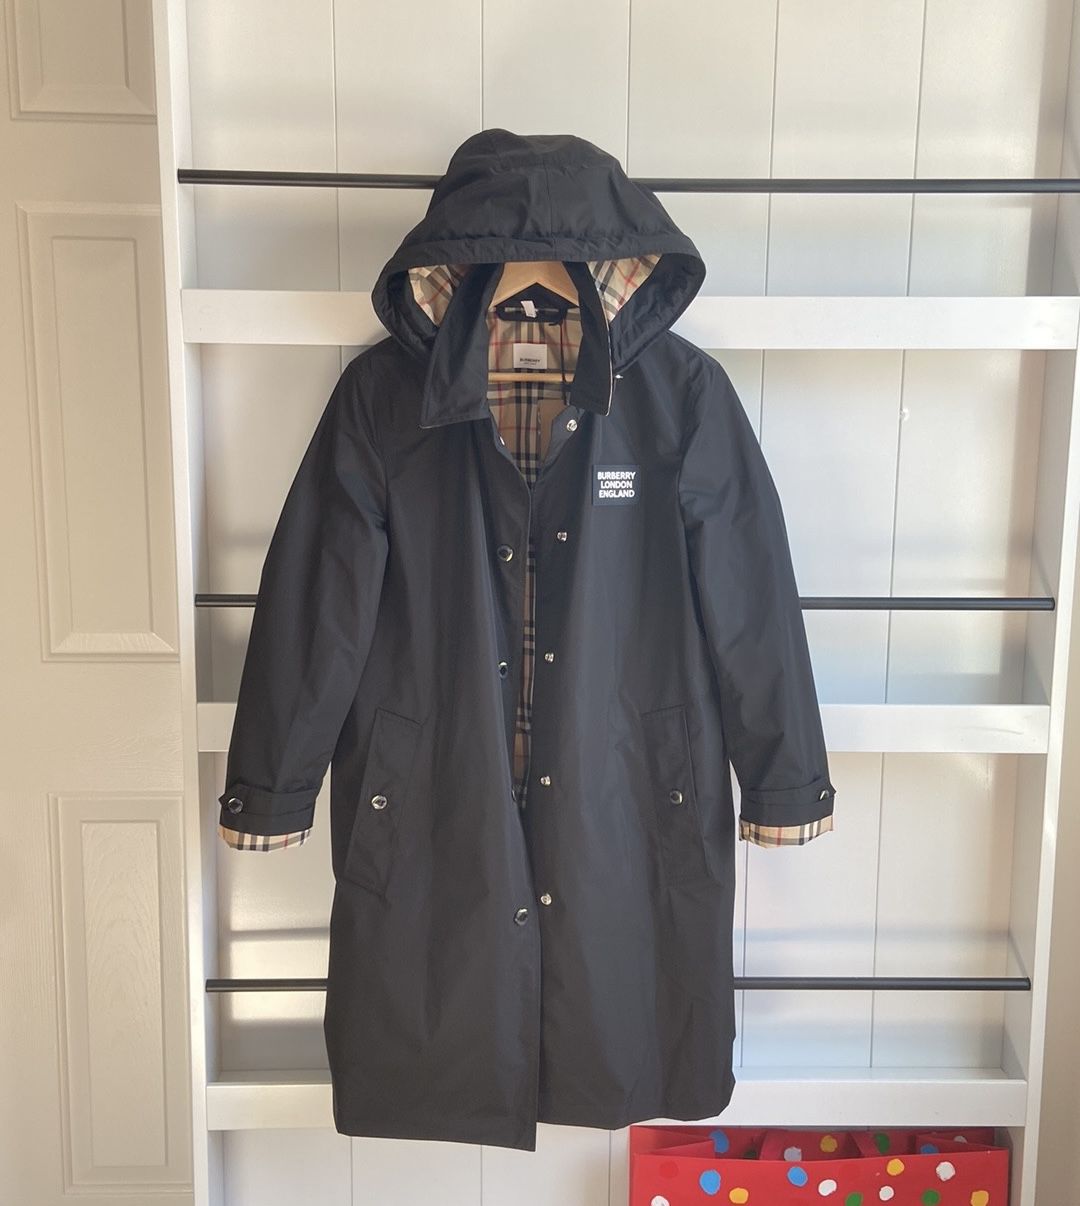 Burberry rain jacket. Size 6. (S-M)